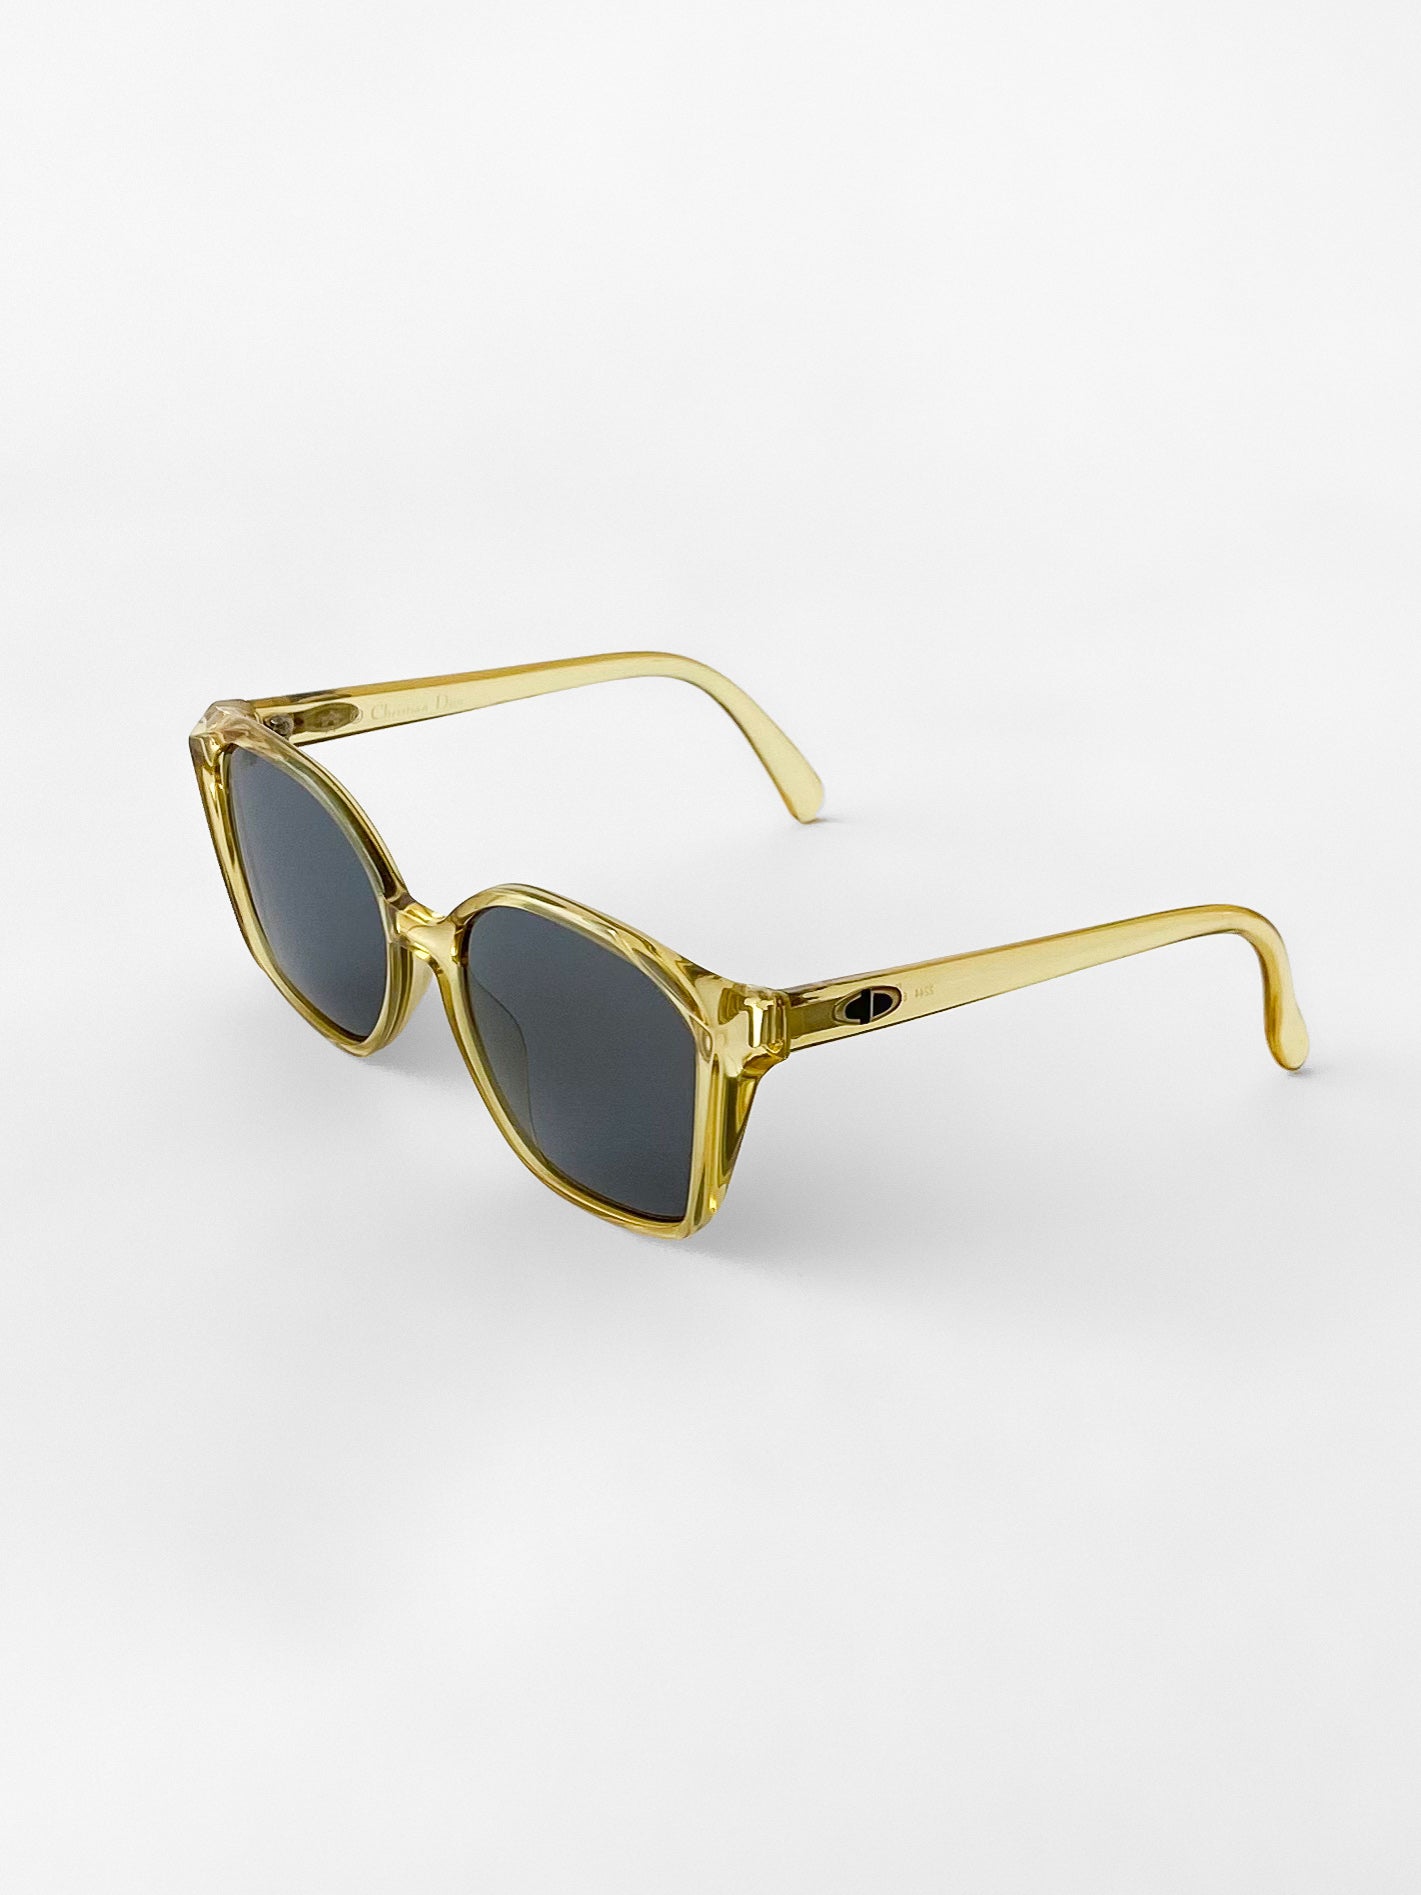 Christian Dior 80's sunglasses